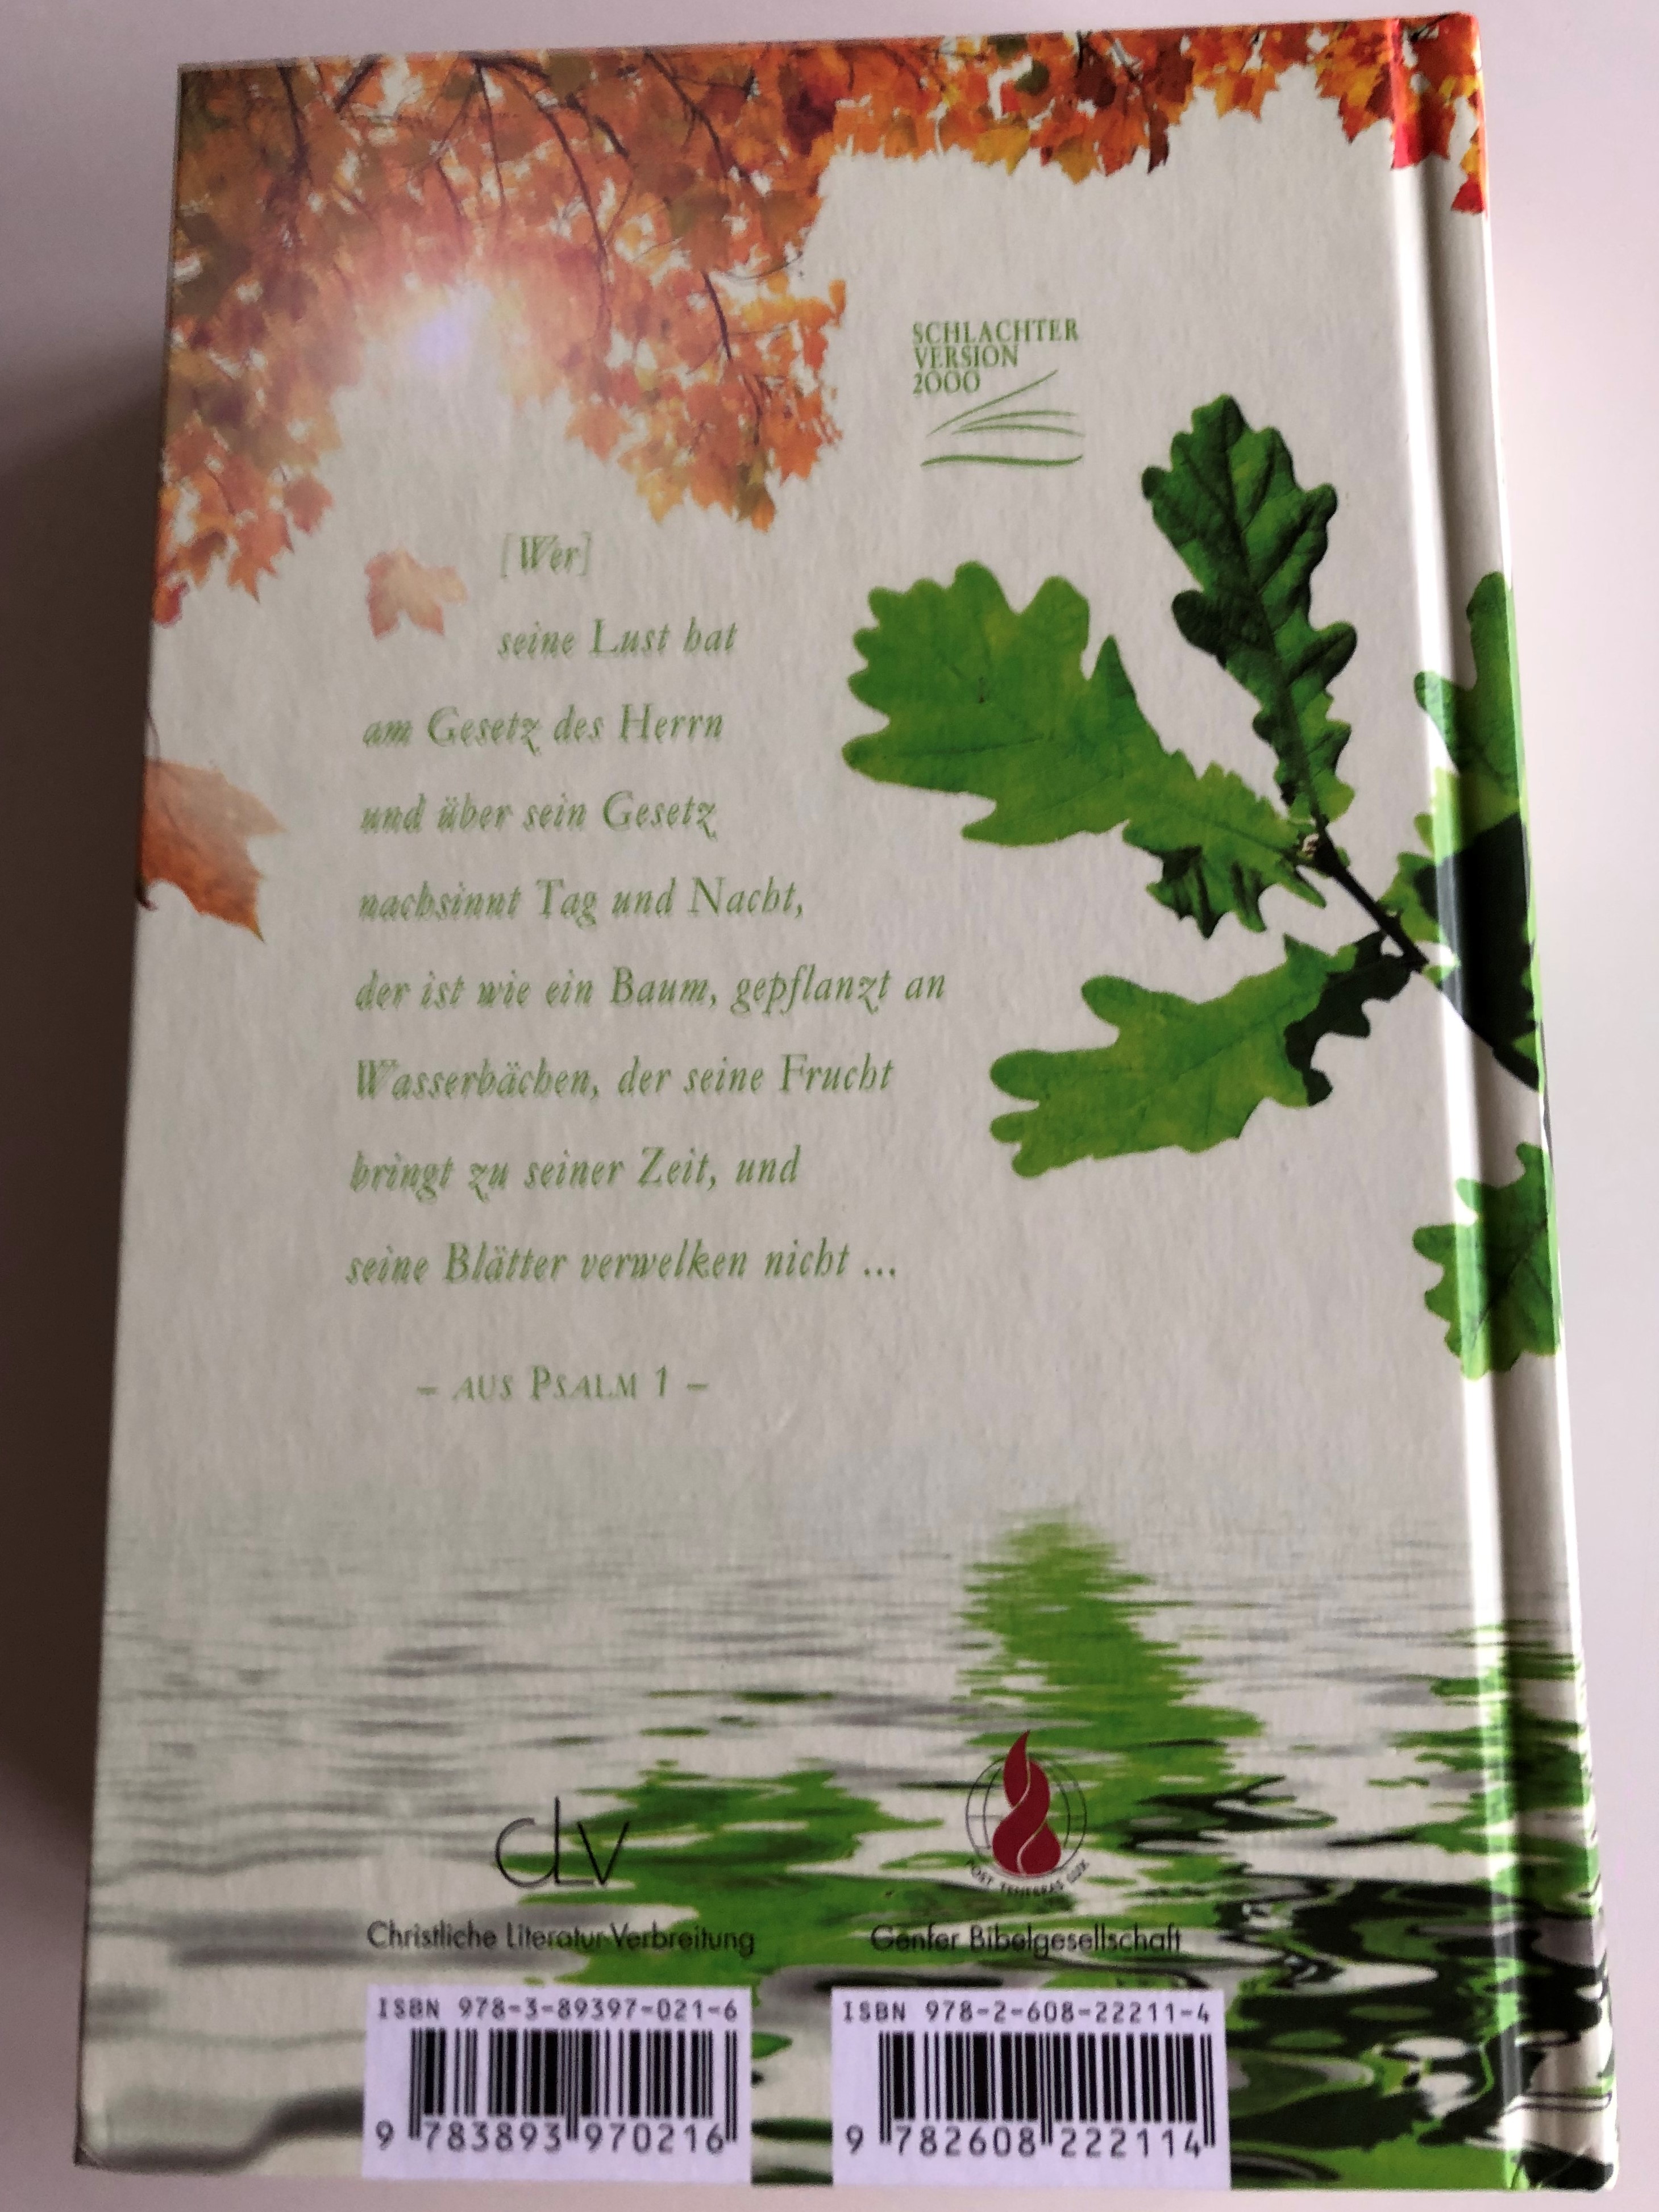 german-language-bible-die-bibel-schlachter-bersetzung-version-2000-17.jpg